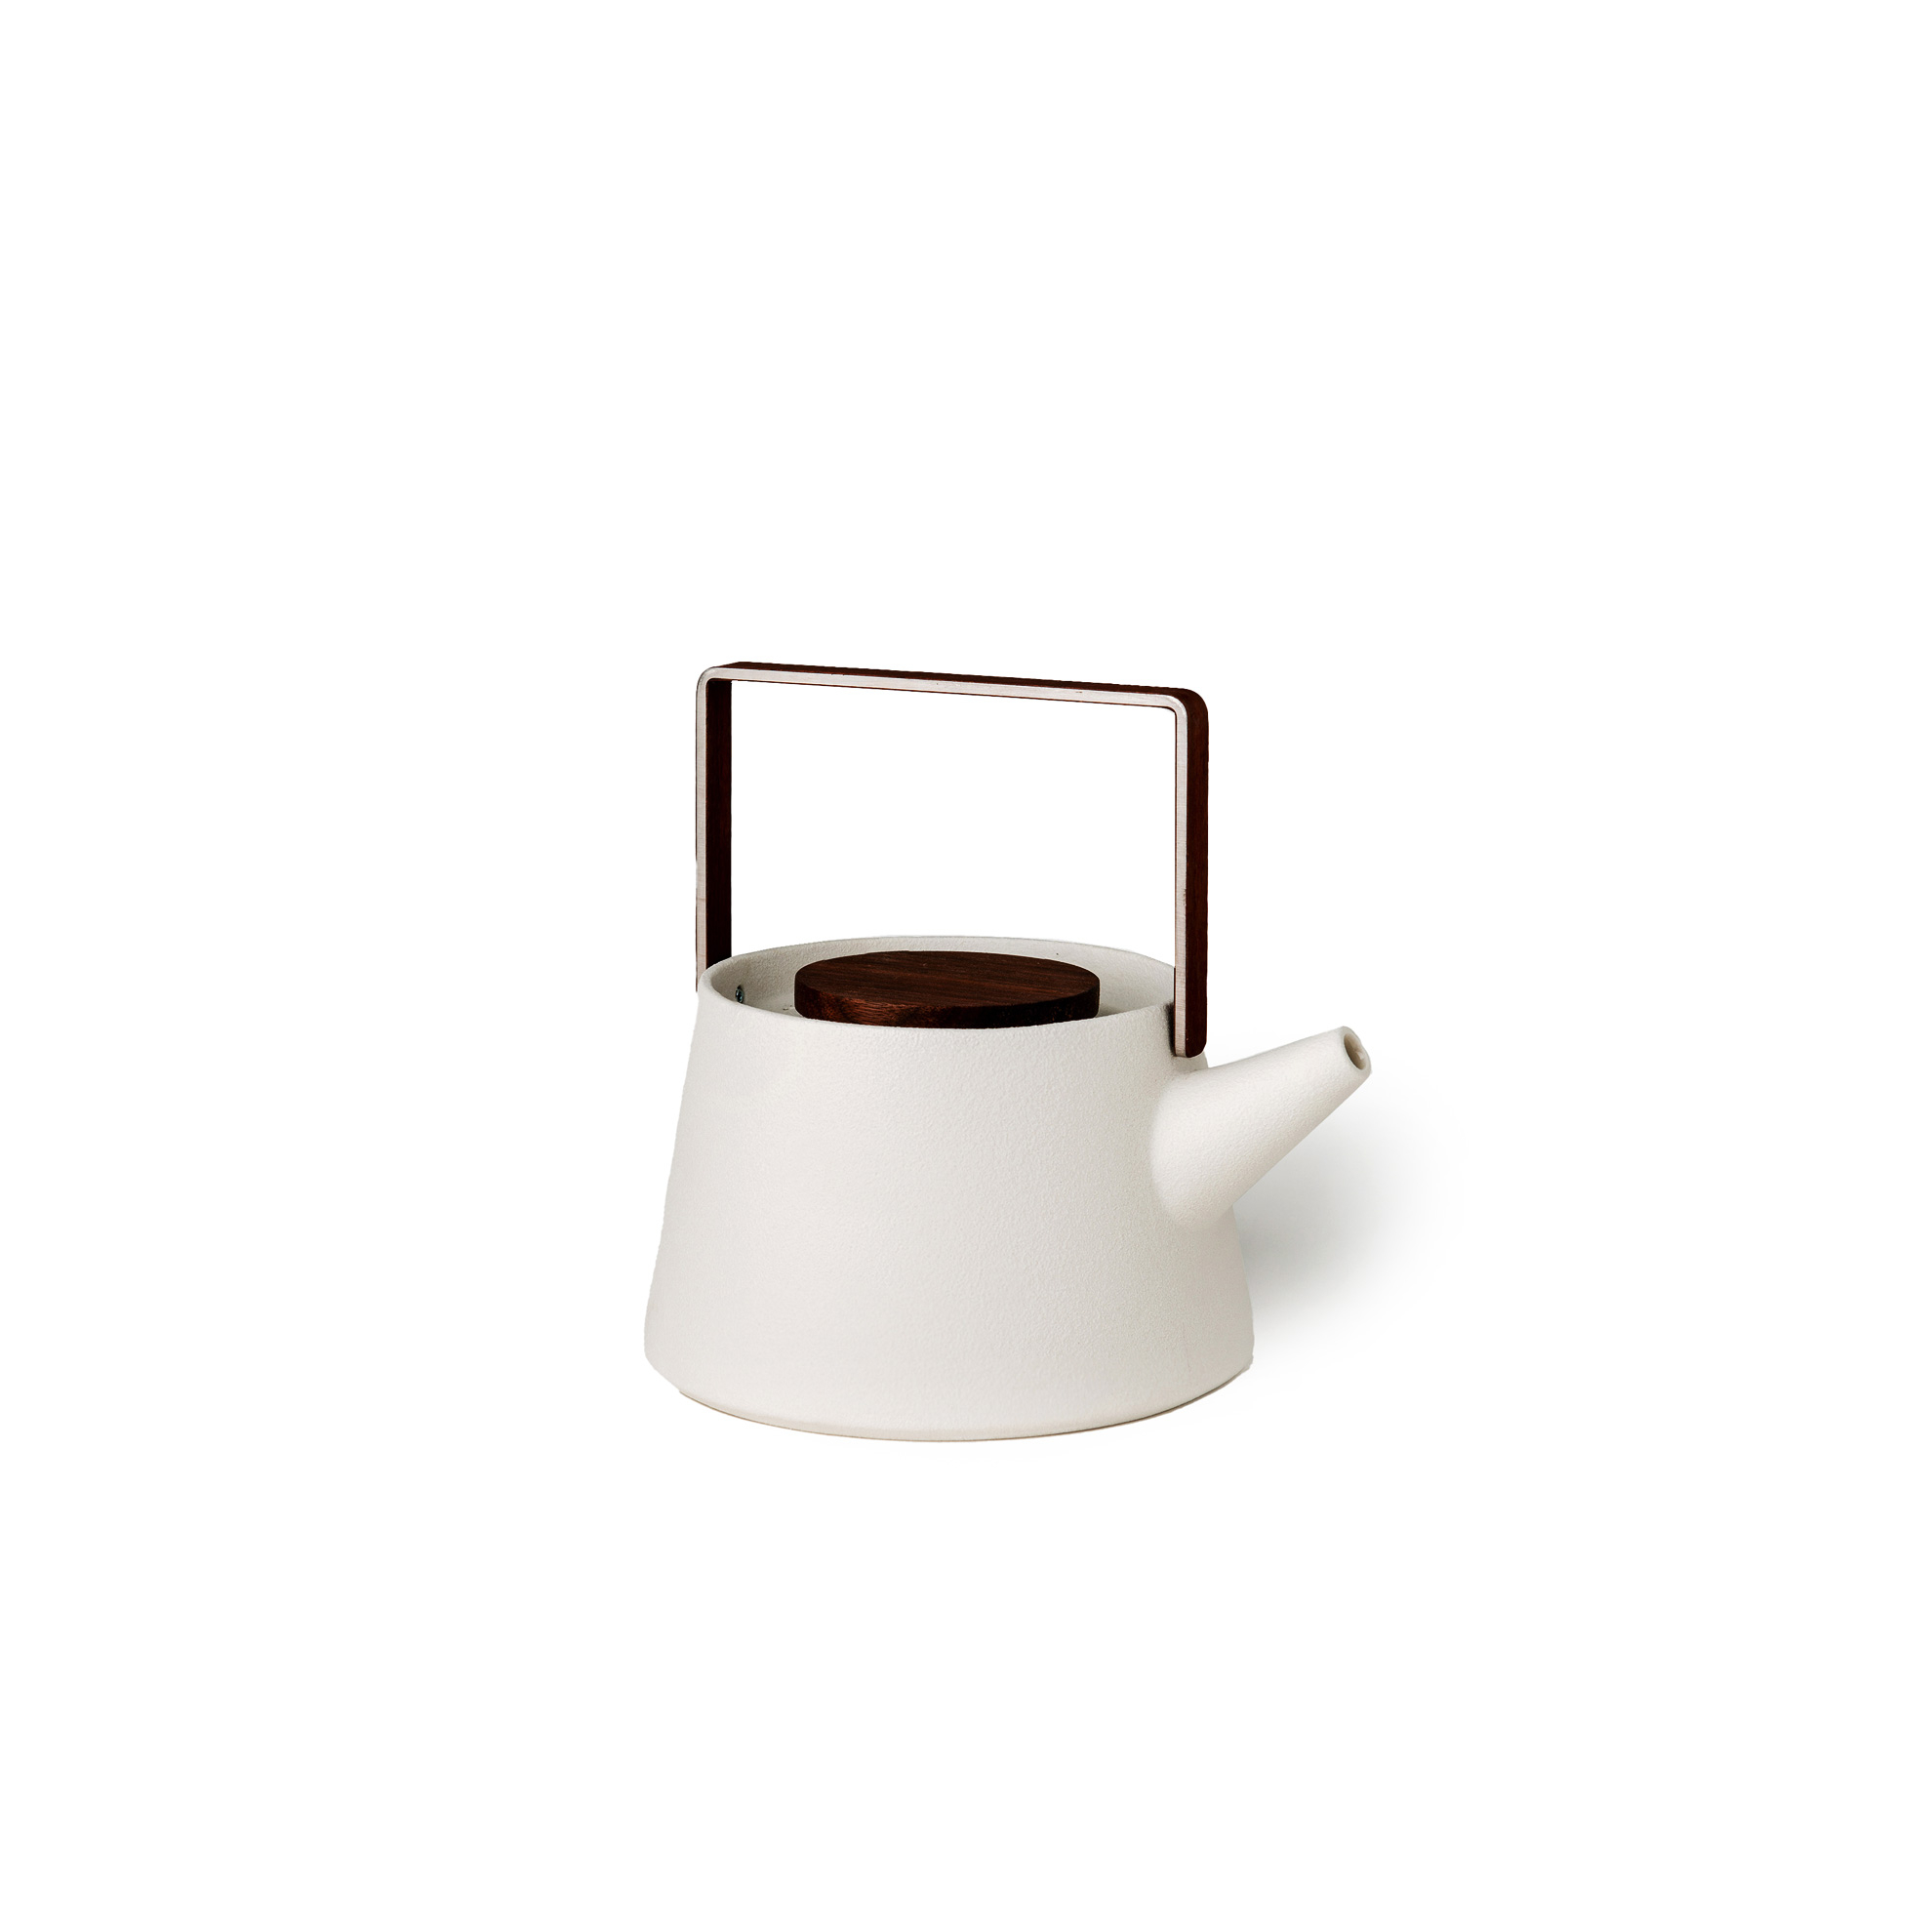 Teapot by Stilleben, Designer Italian